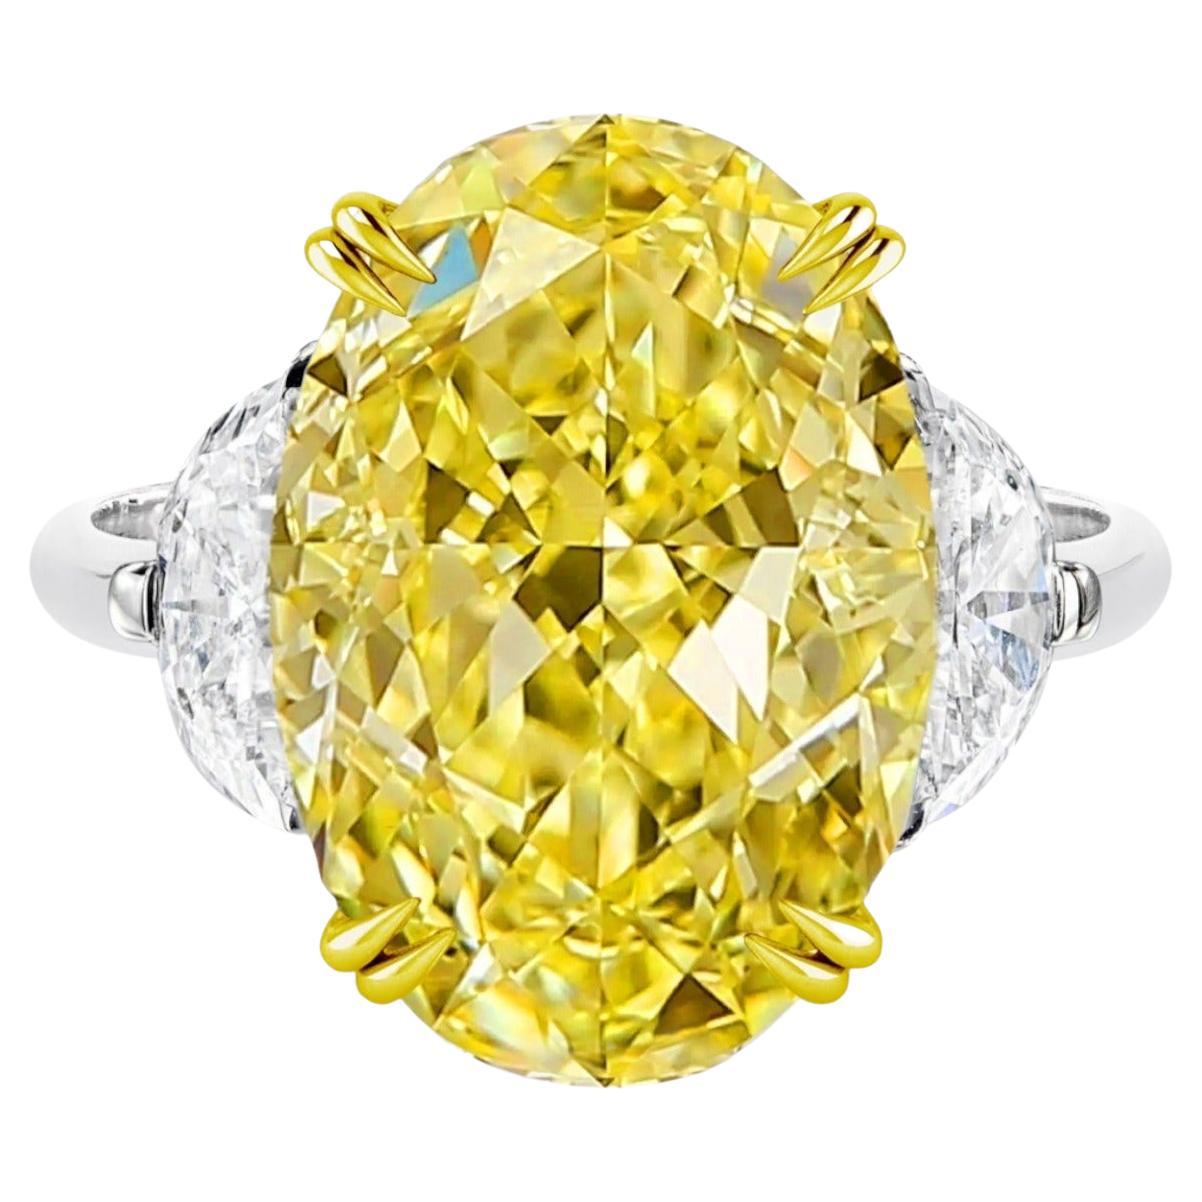 GIA Certified 5.36 Carat Fancy Intense Yellow Internally Flawless Diamond Ring For Sale